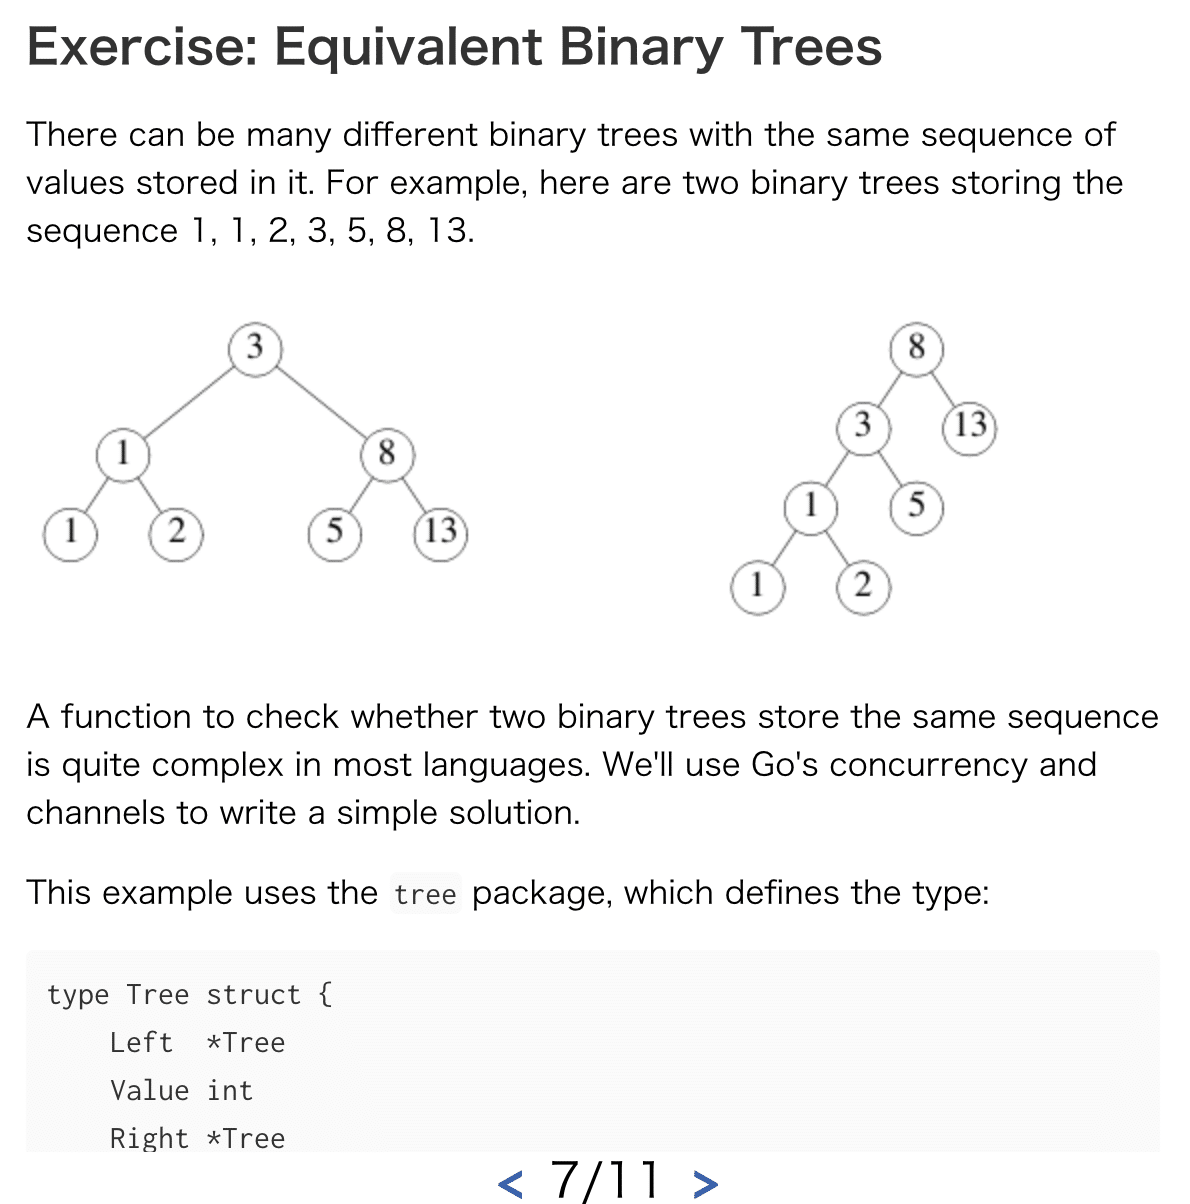 go tour exercise equivalent binary trees